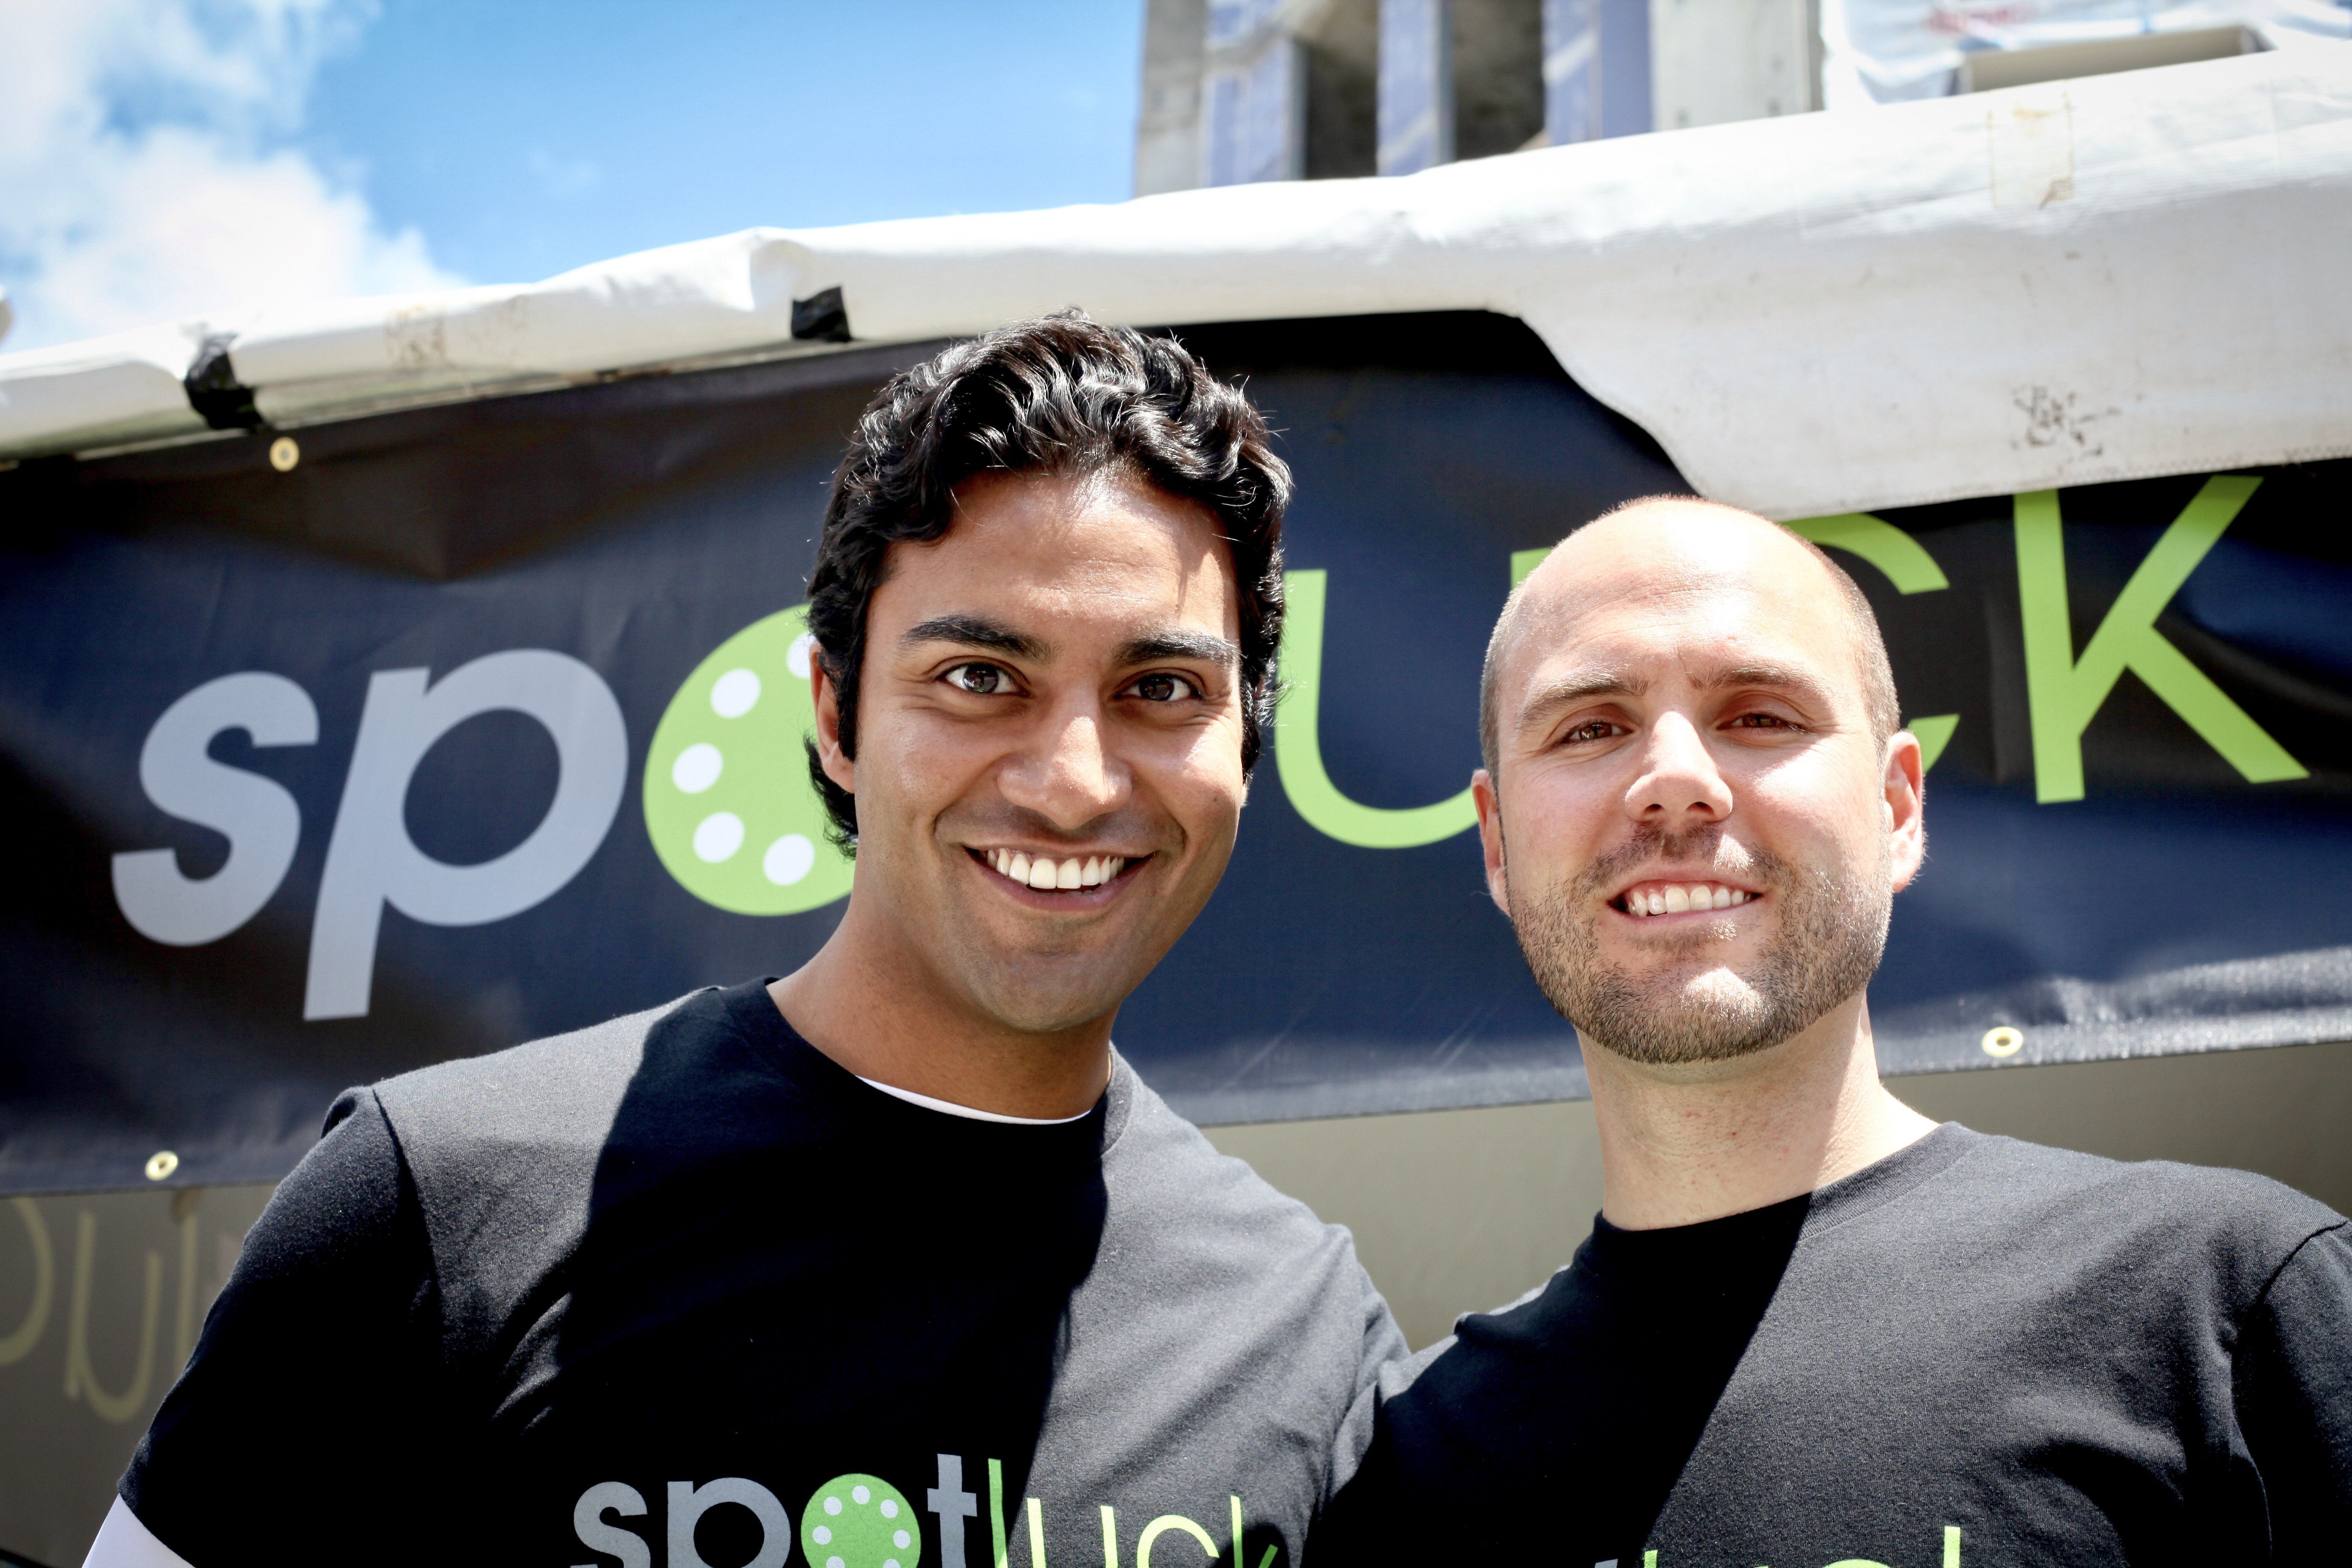 Spotluck Co-founders Cherian Thomas (left) and Brad Sayler (right).